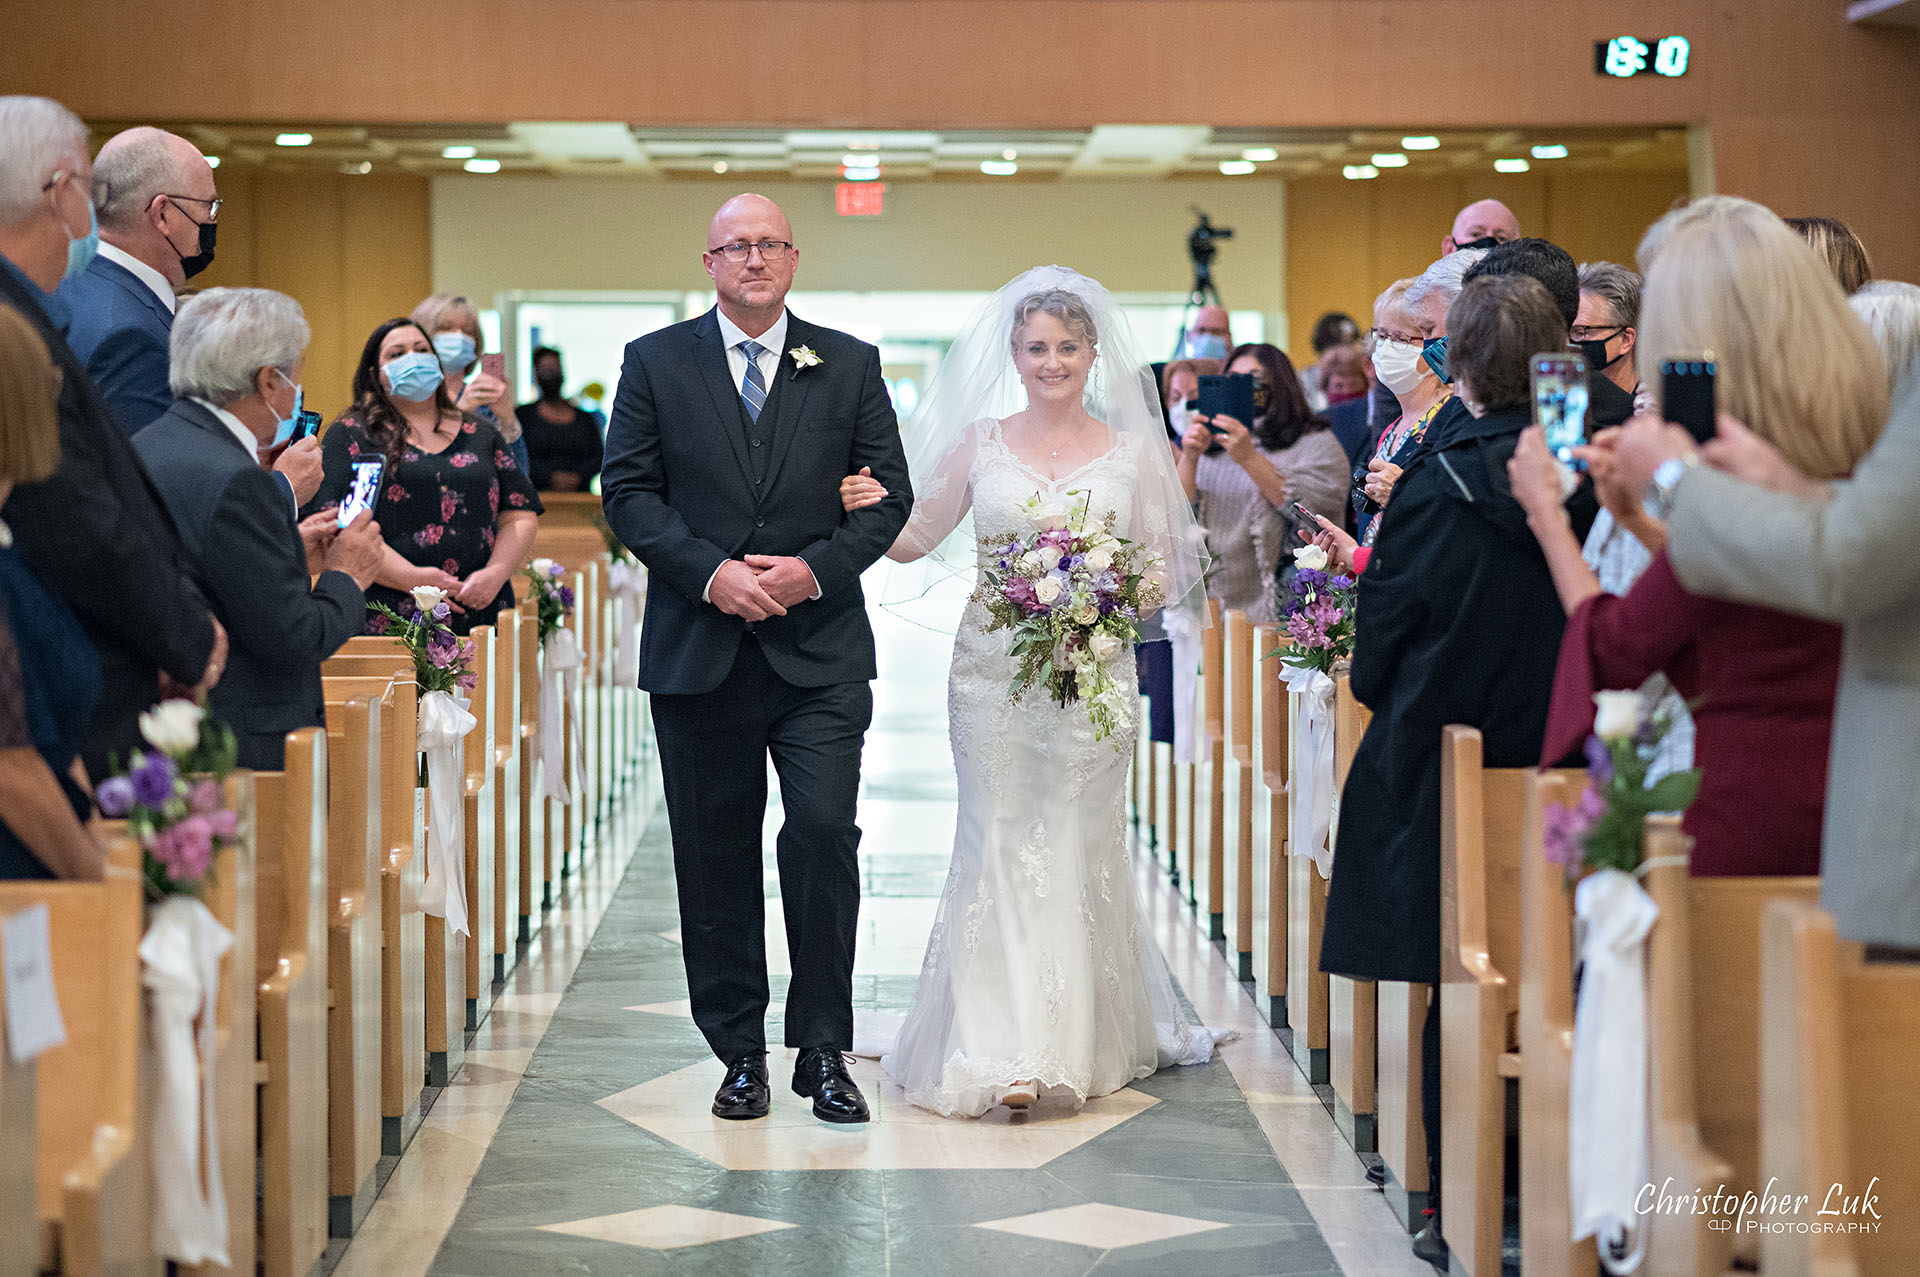 Christopher Luk Toronto Wedding Photographer Natural Candid Photojournalistic Tyndale Chapel Entrance Bride Walking Down Aisle Church Ceremony Smile